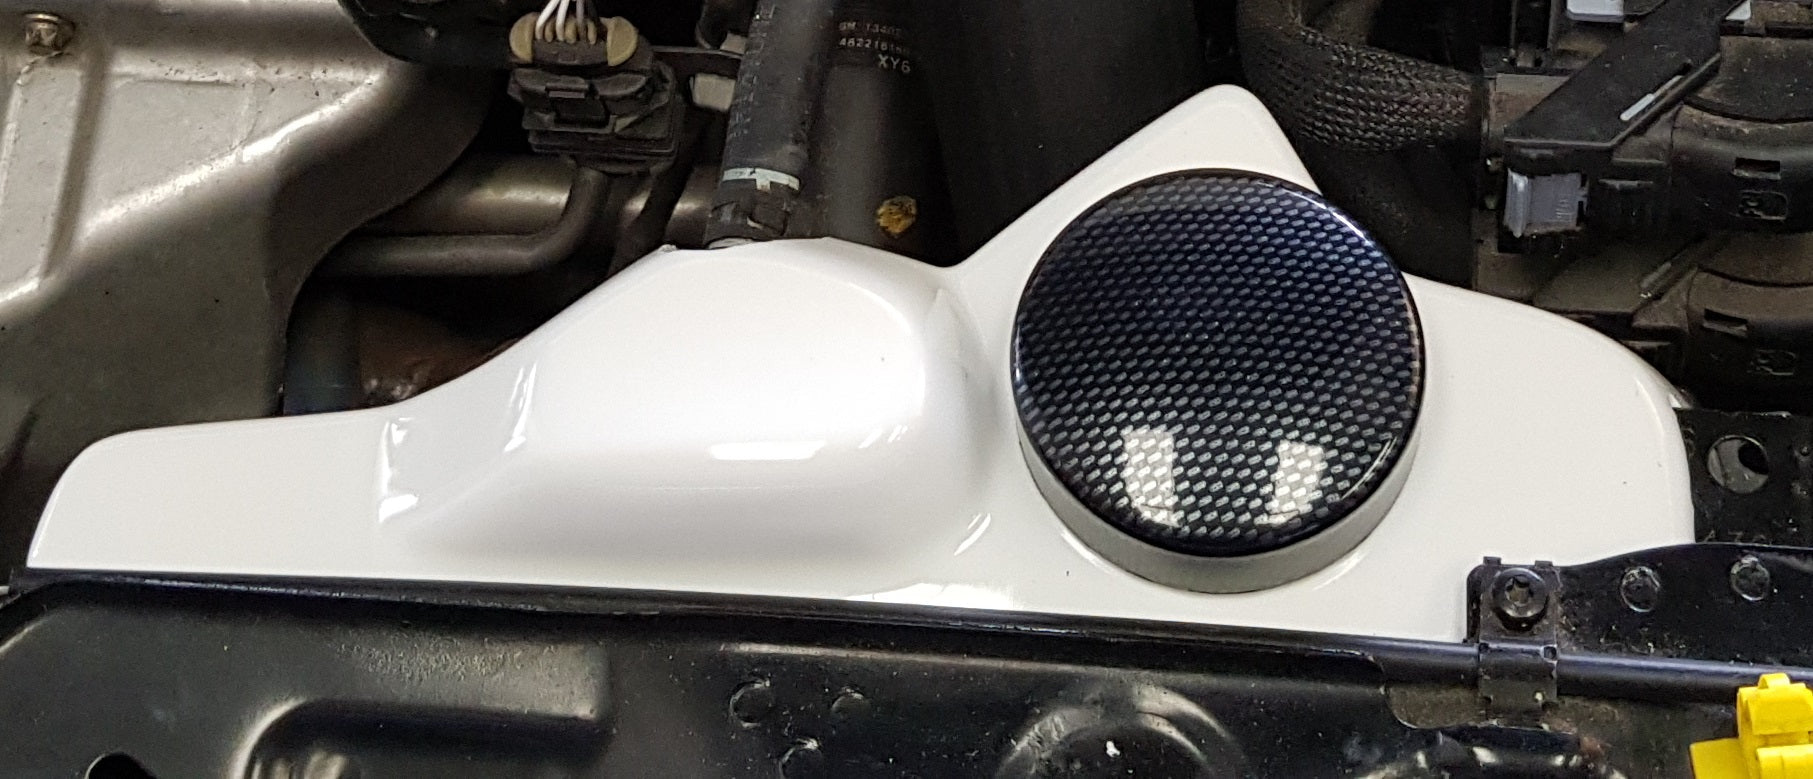 Proform Coolant Cap Cover - Vauxhall / Opel Corsa D inc VXR (Plastic Finishes)